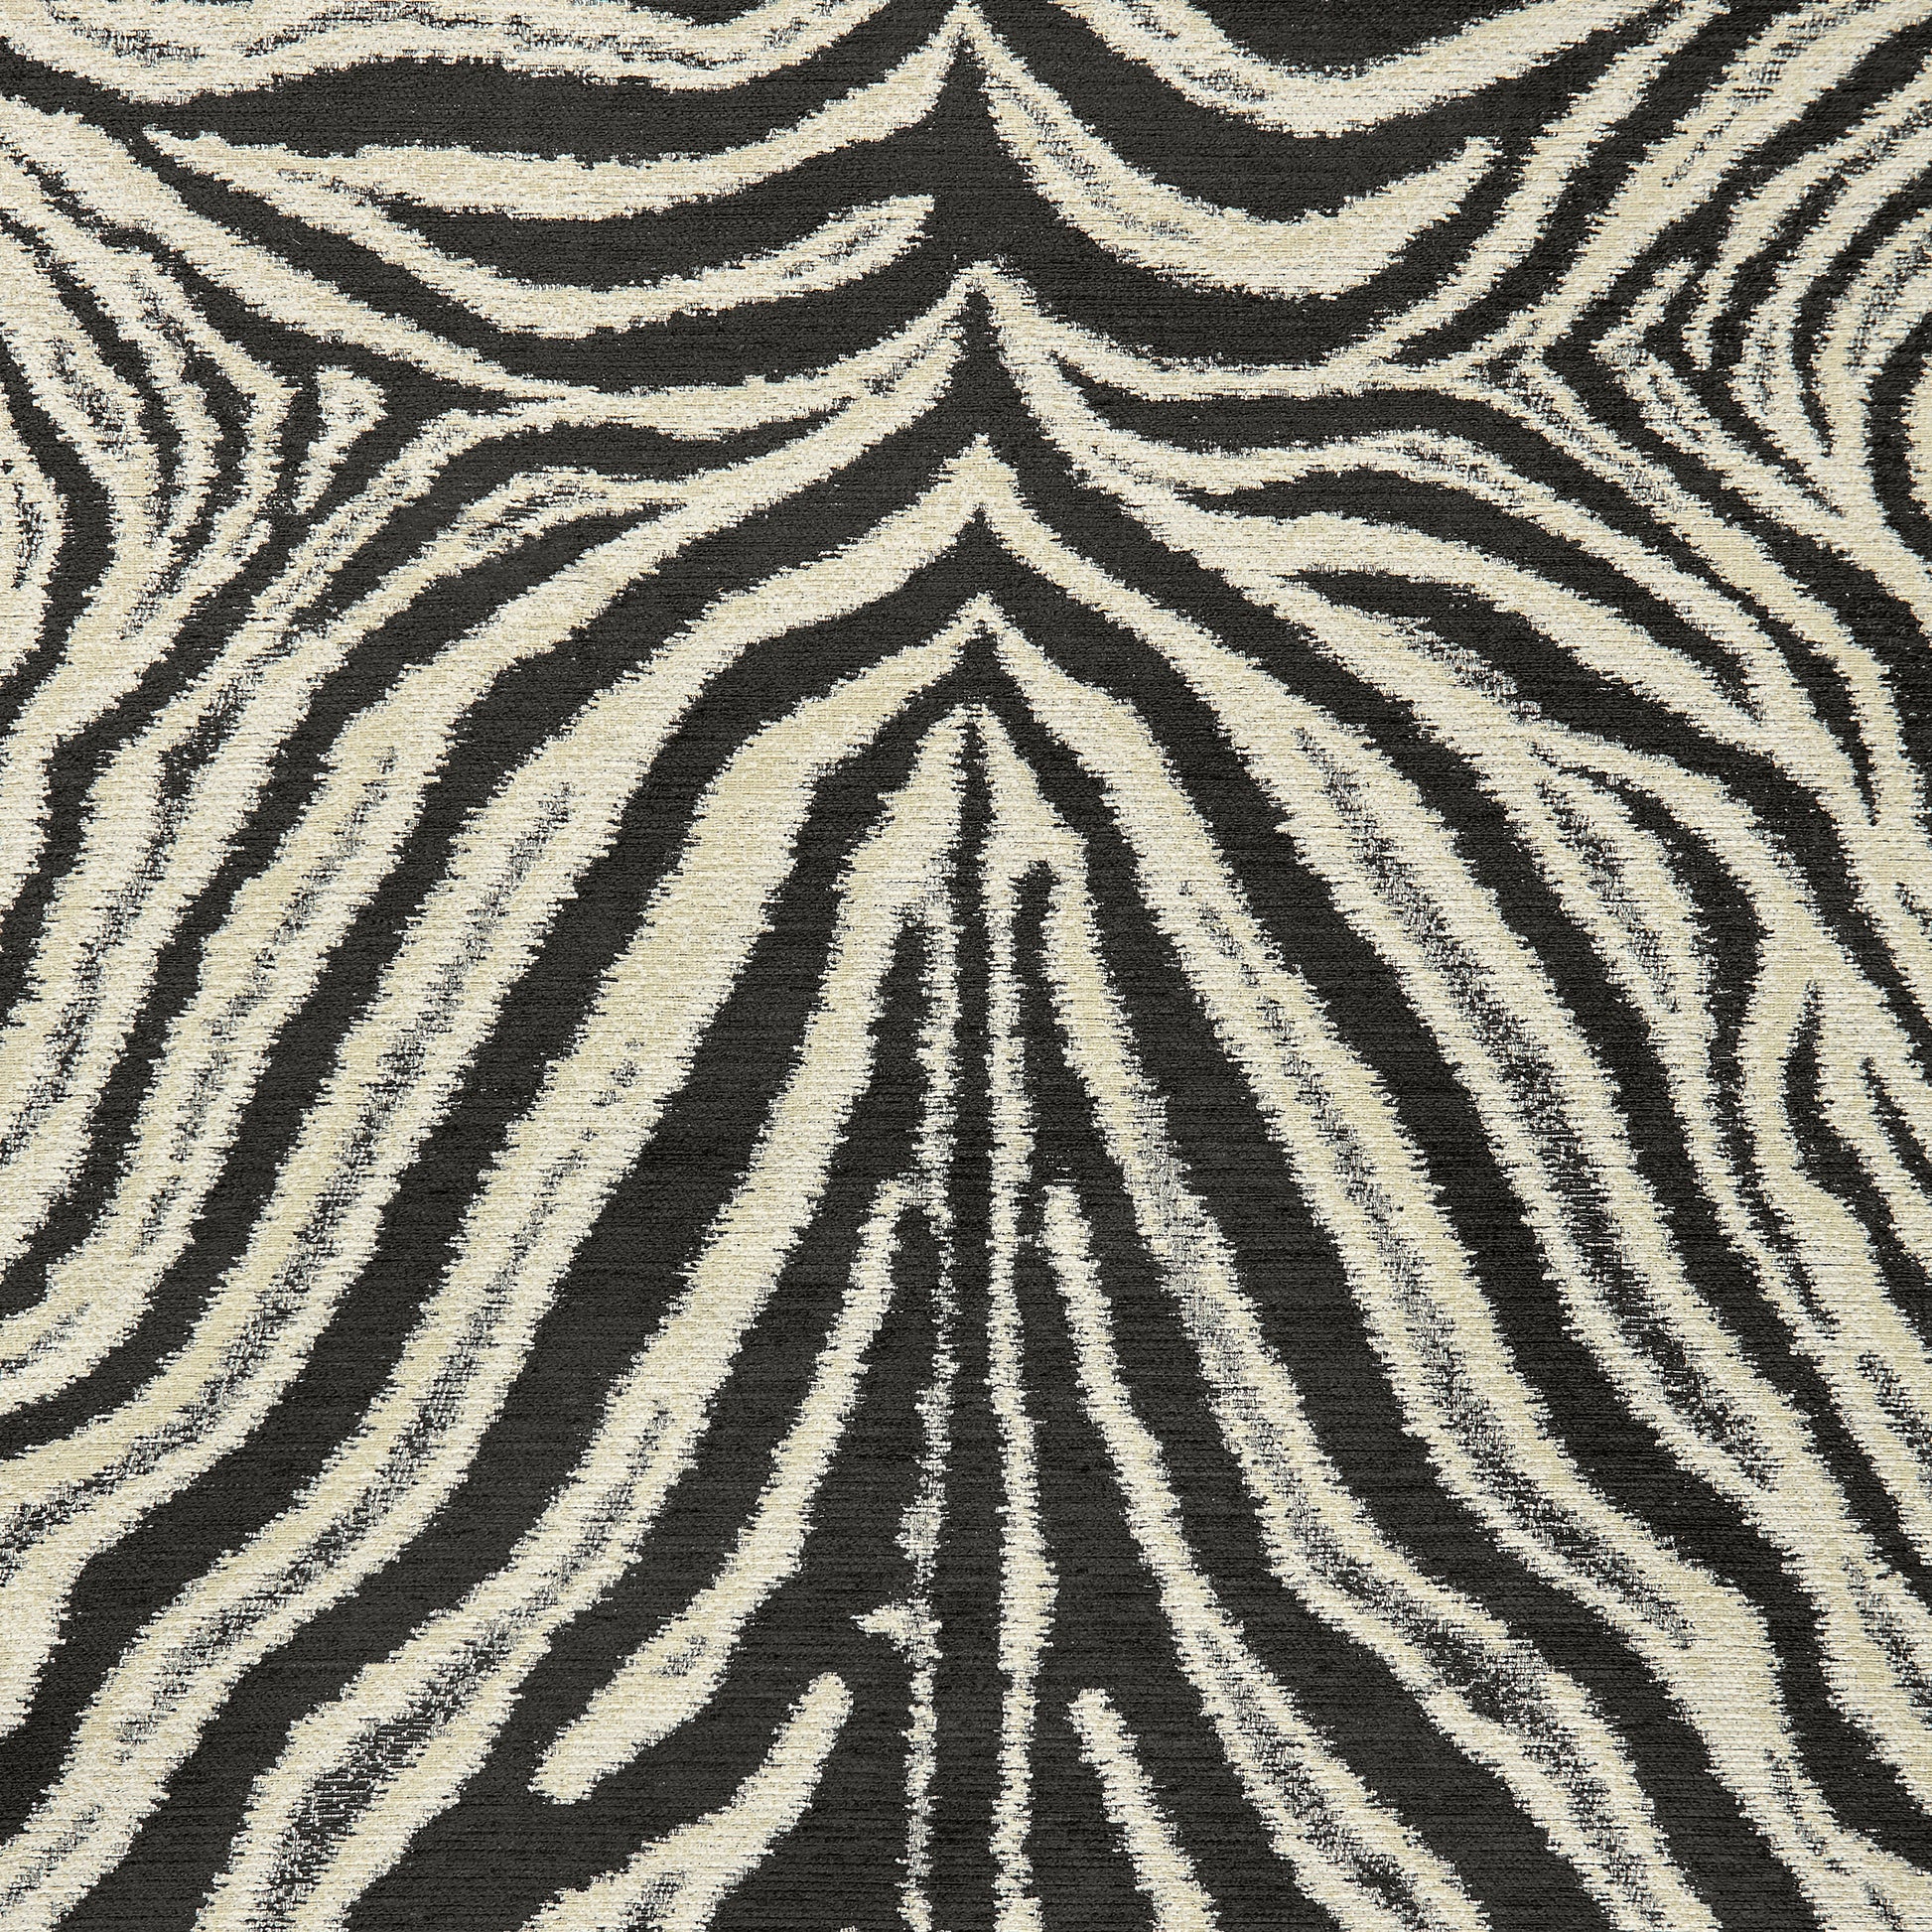 Purchase Thibaut Fabric SKU W80438 pattern name Zamira color Black